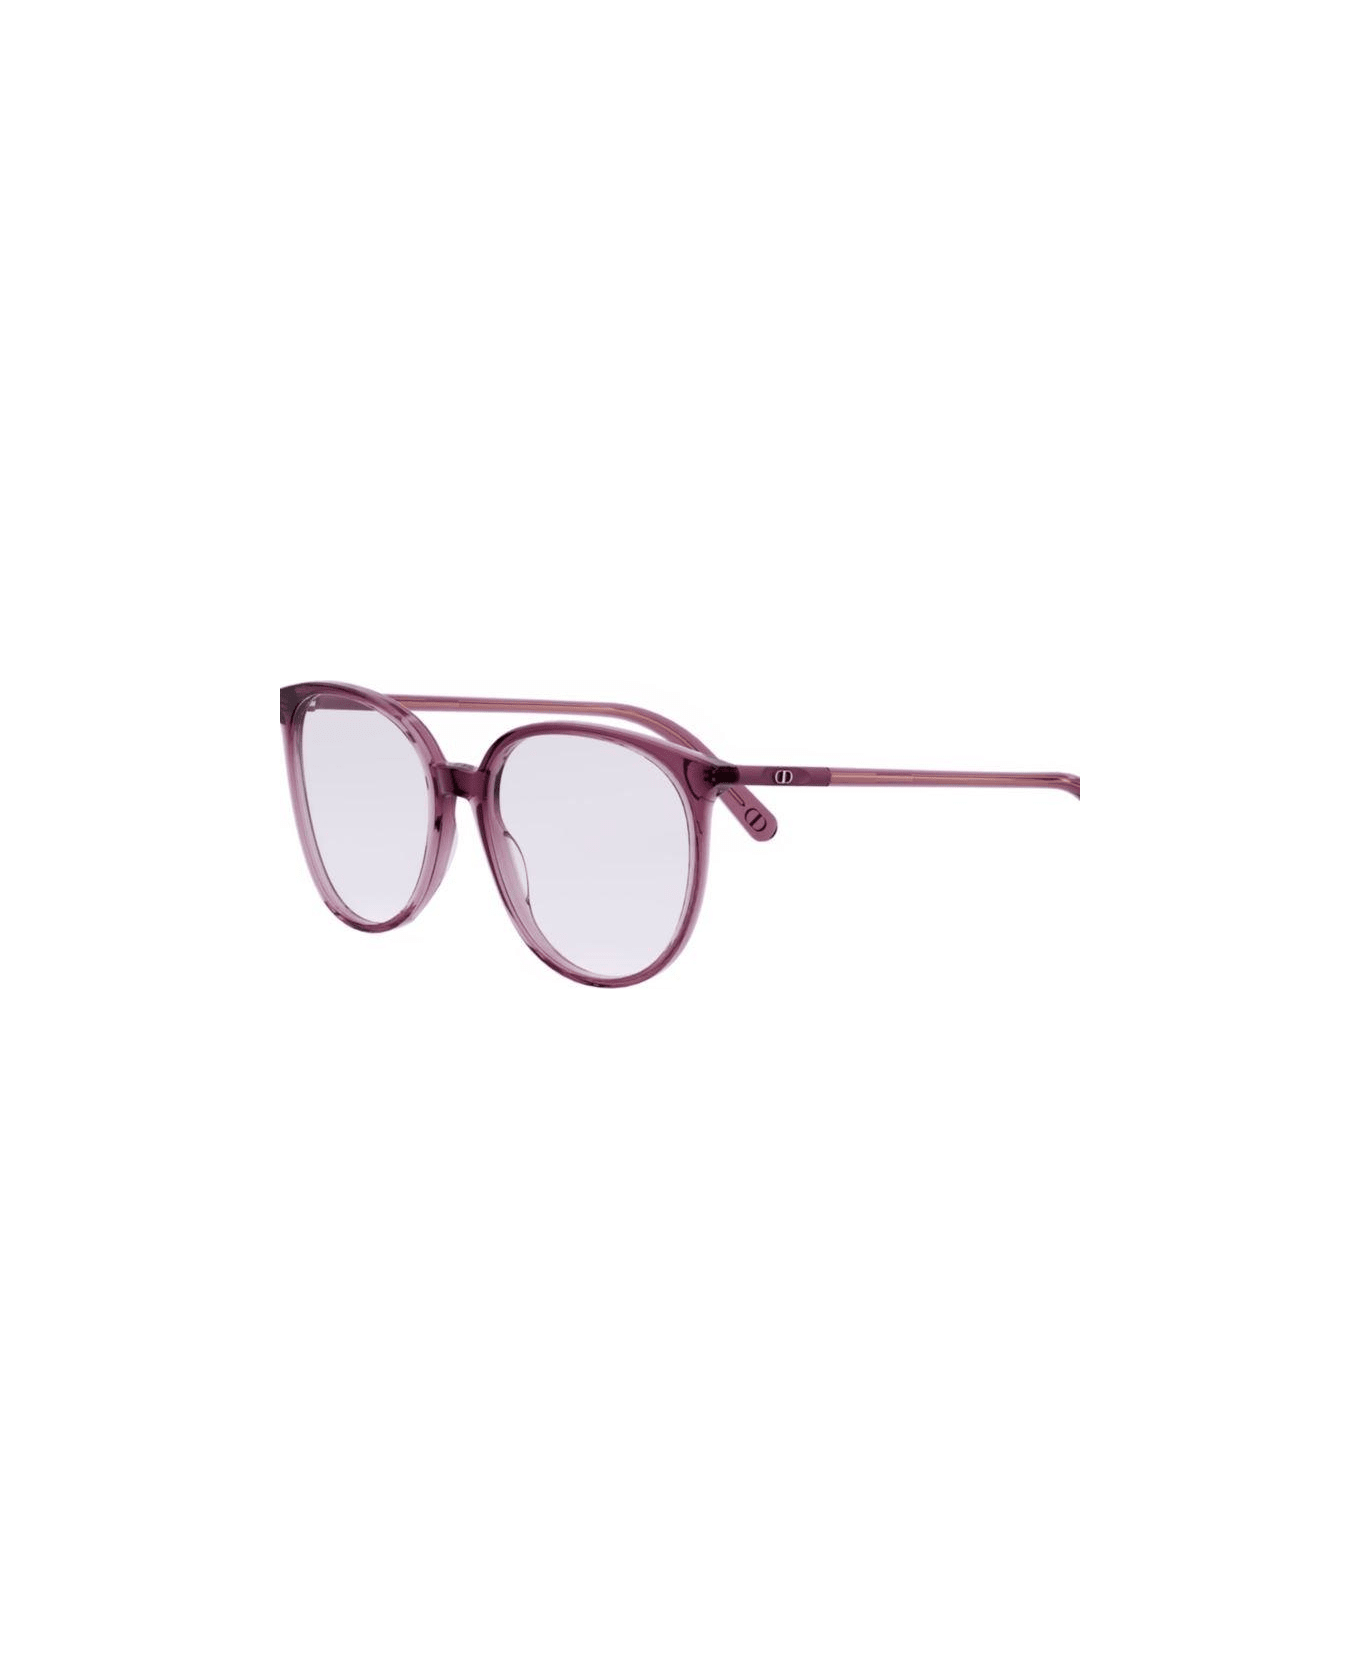 Dior Eyewear Round Frame Glasses - 3600 アイウェア